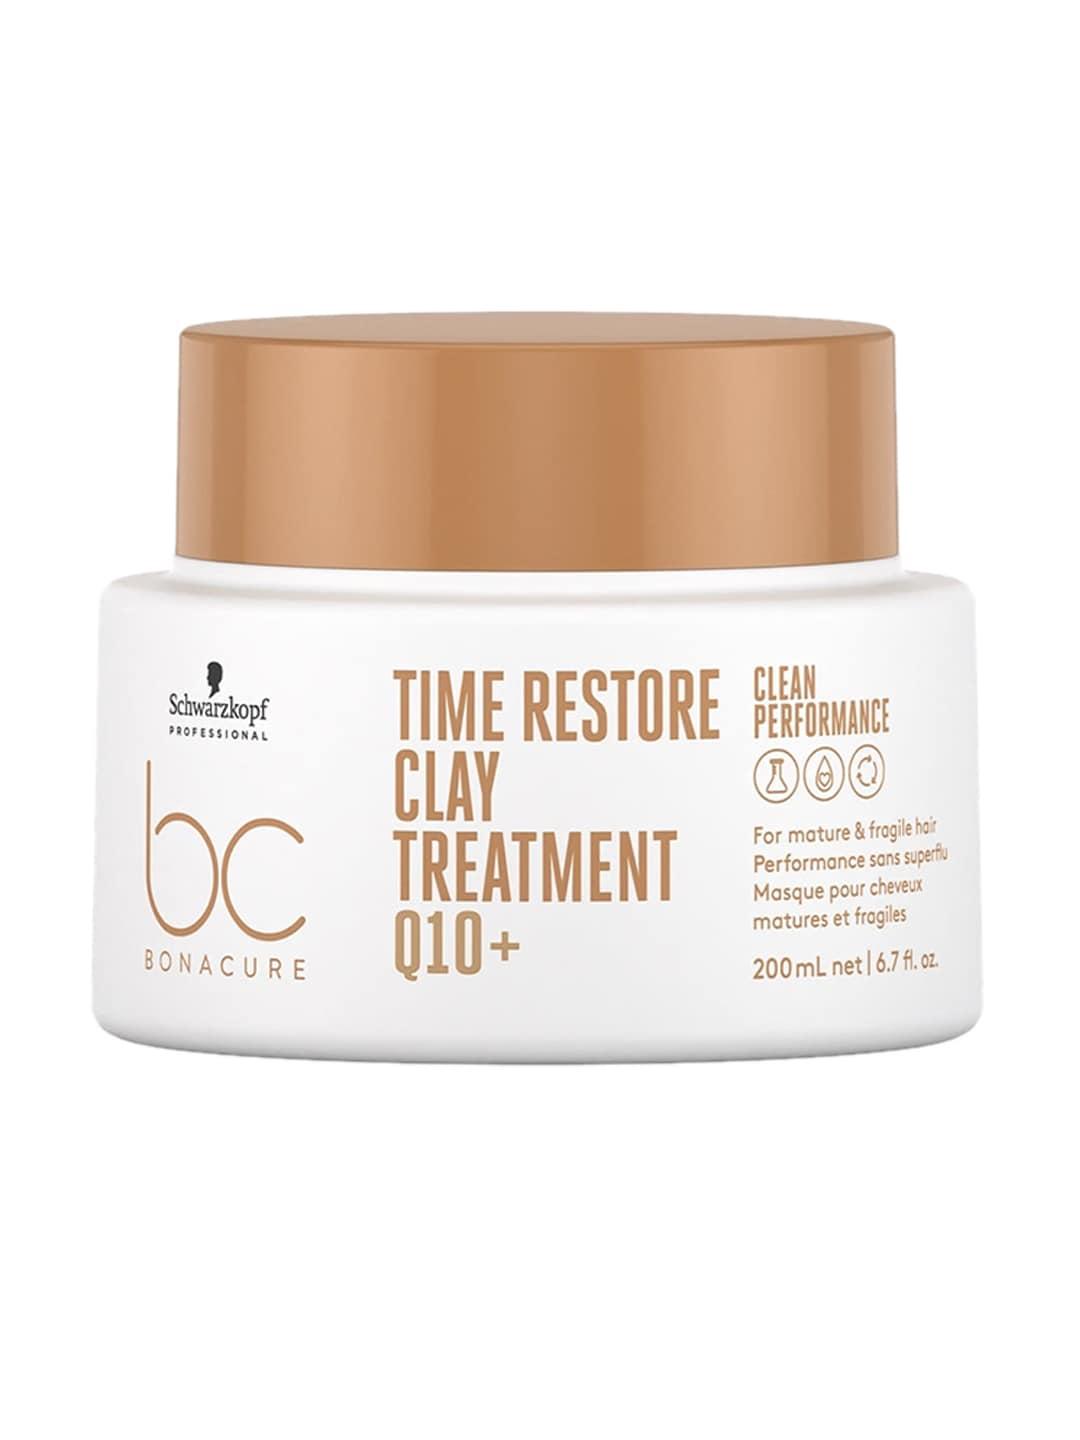 Schwarzkopf PROFESSIONAL Bonacure Time Restore Clay Treatment Q10+ Hair Mask - 200ml